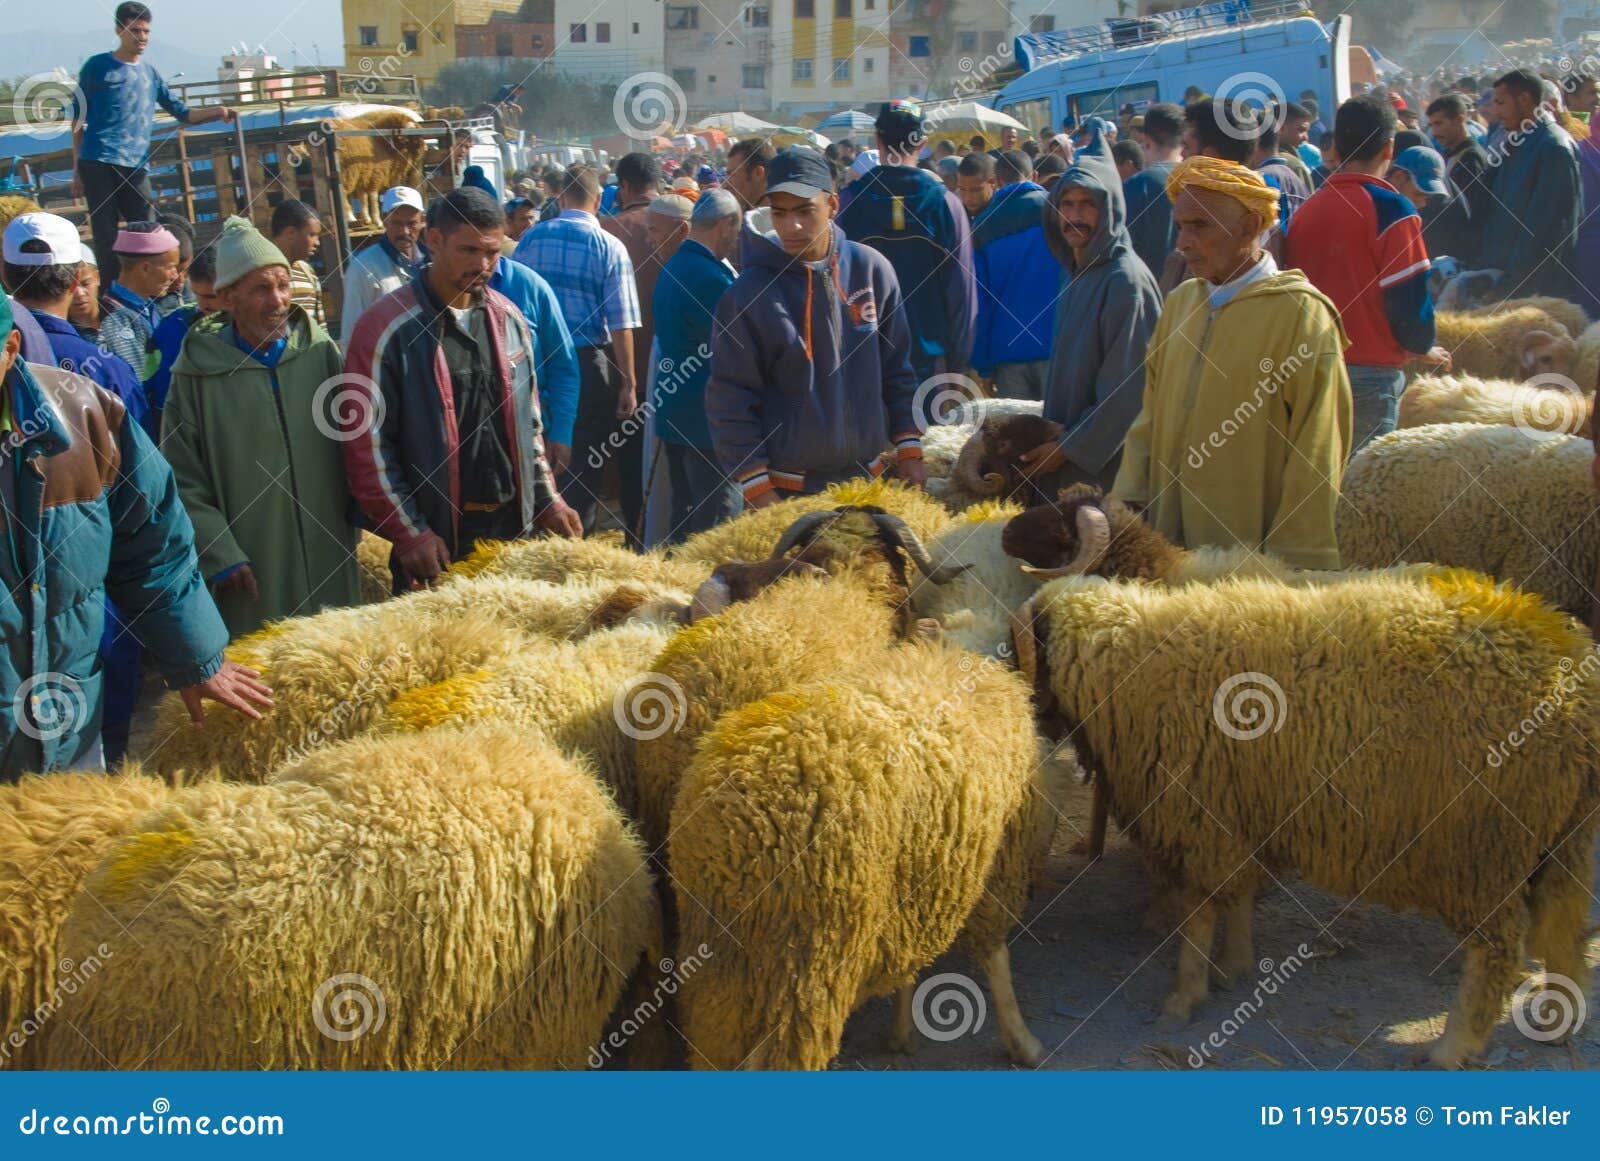 Selecting A Sheep For The Sacrifice Of Eid Al-Adha 